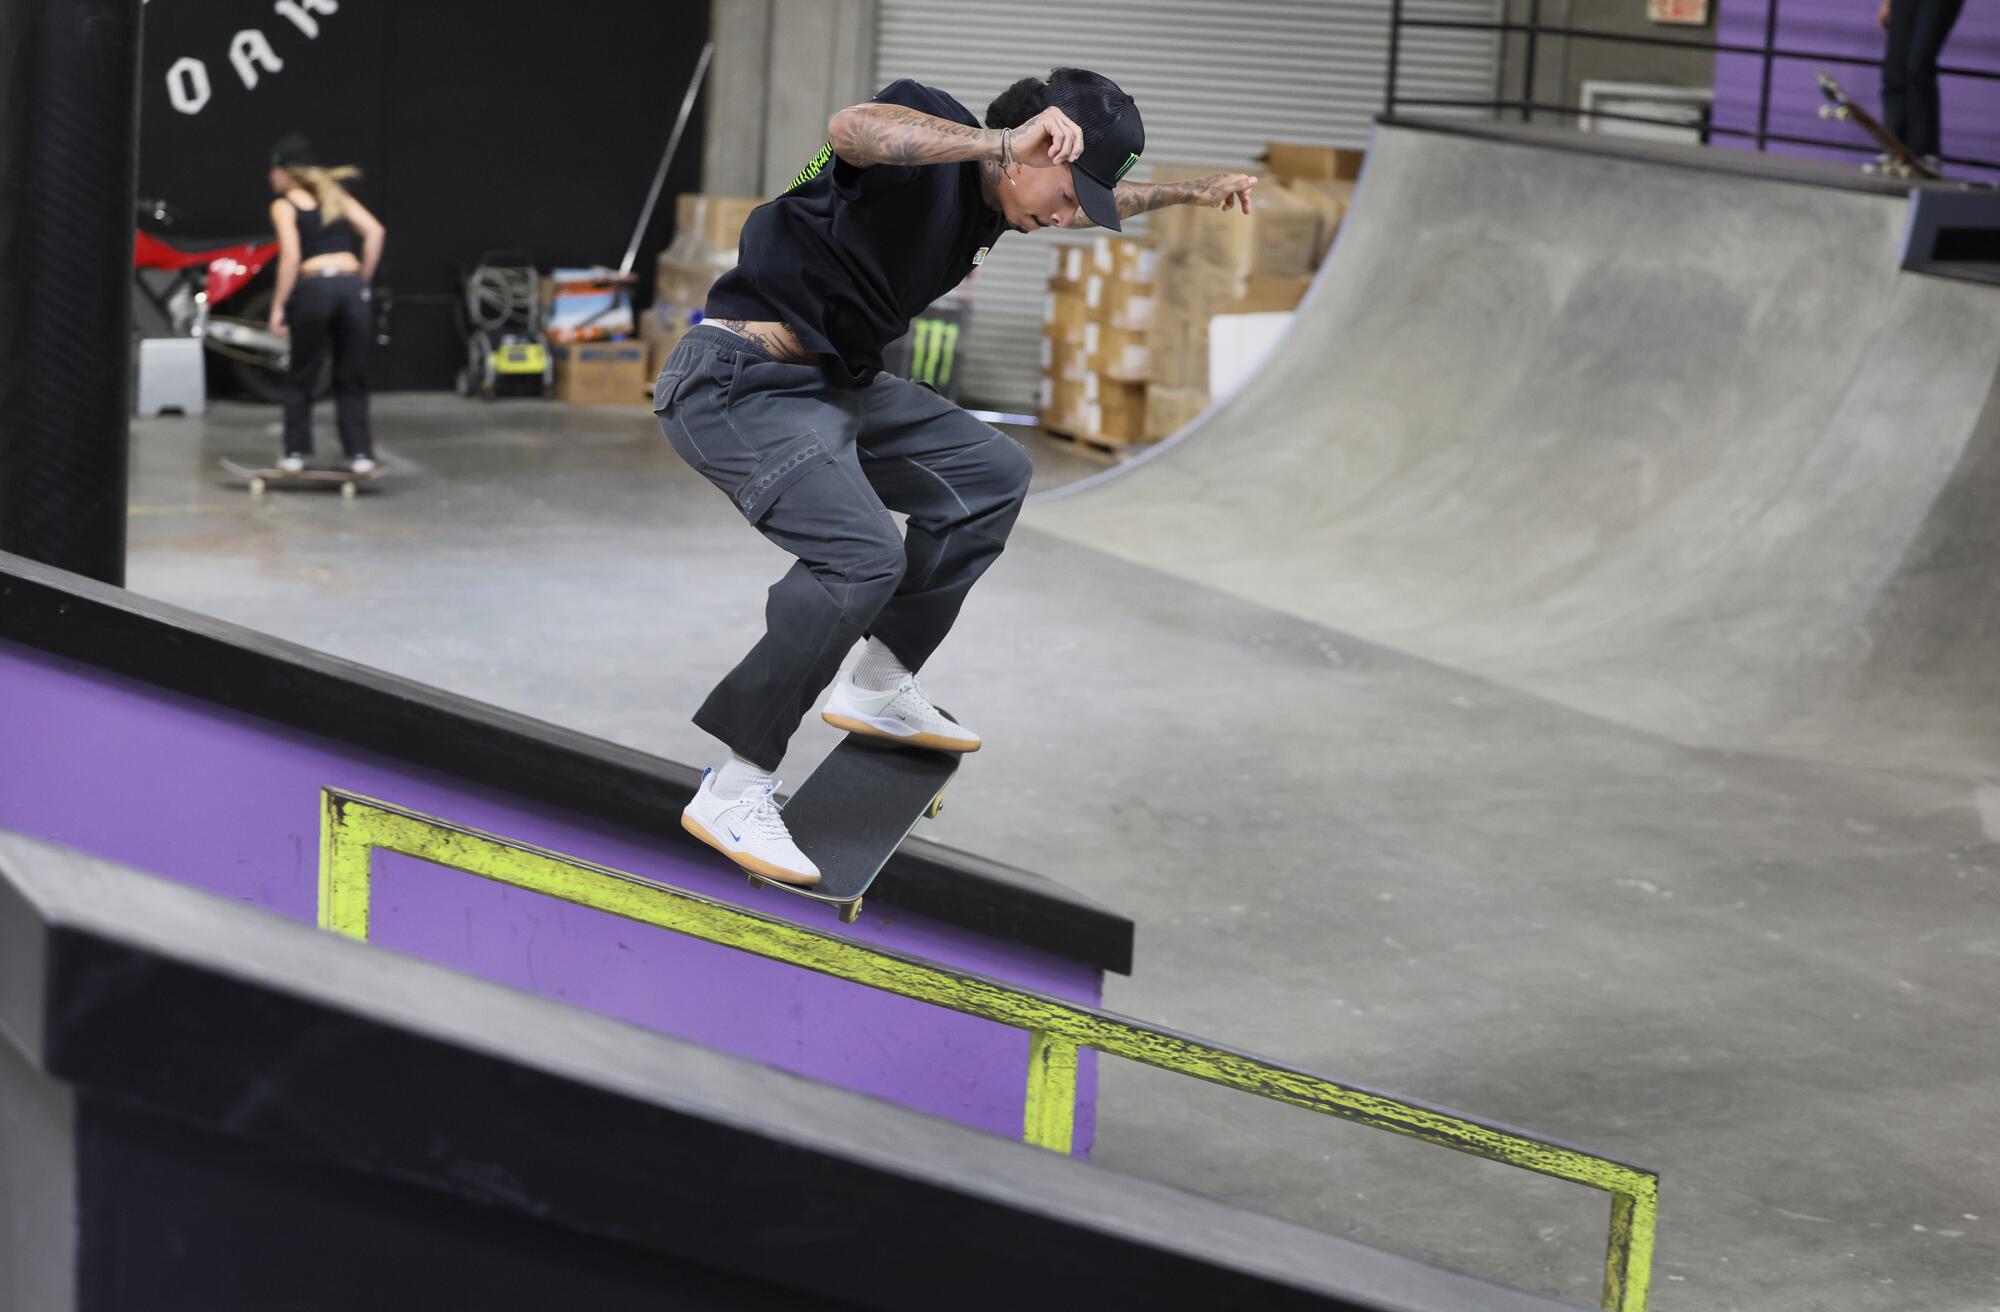 Nyjah Huston trains at his private skatepark in San Clemente in June.